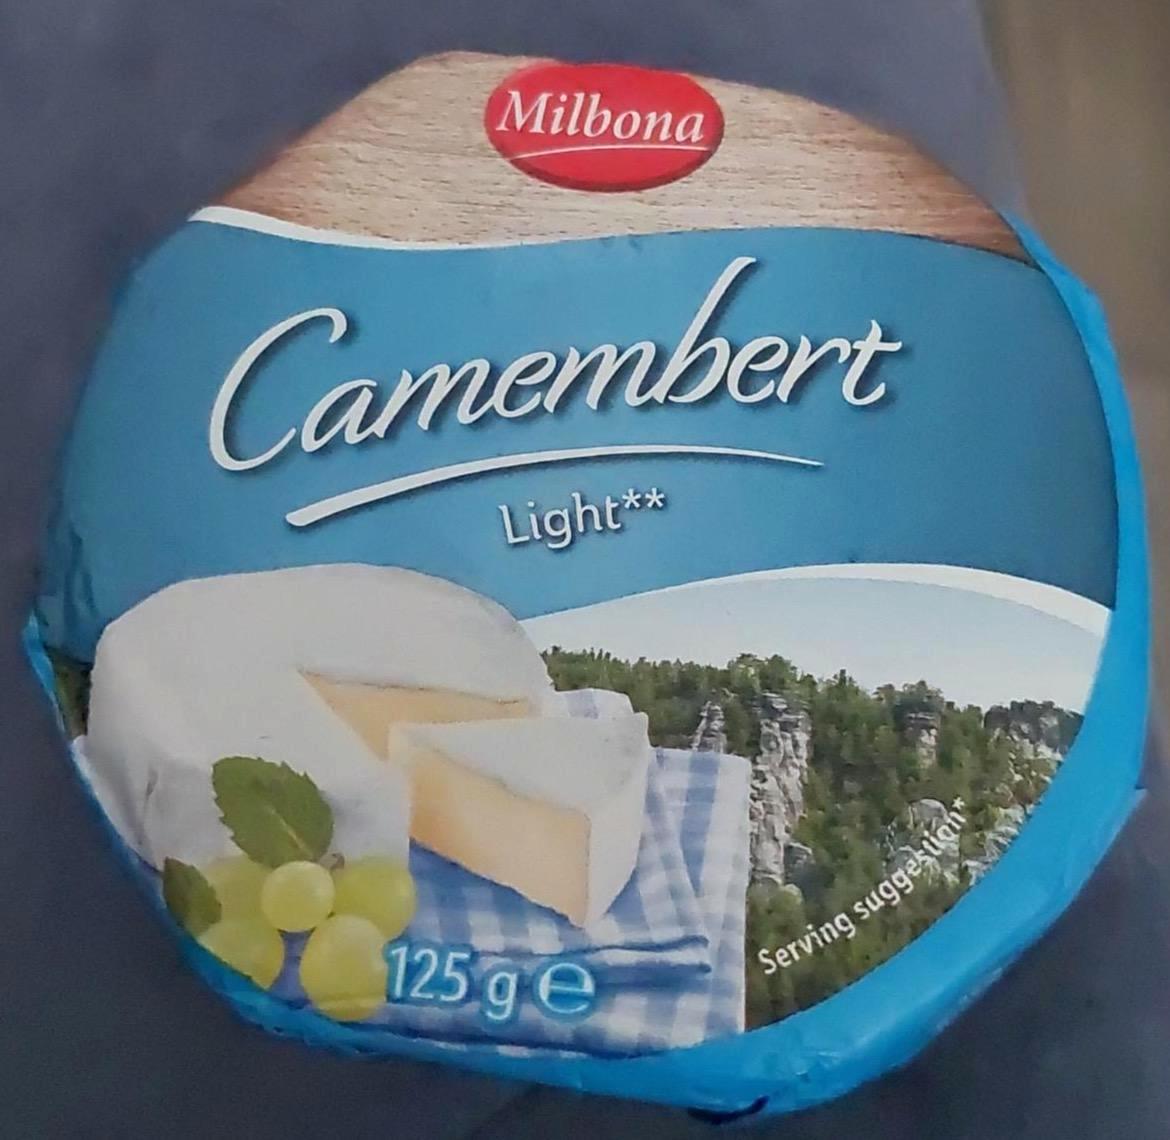 Képek - Camembert Light Milbona